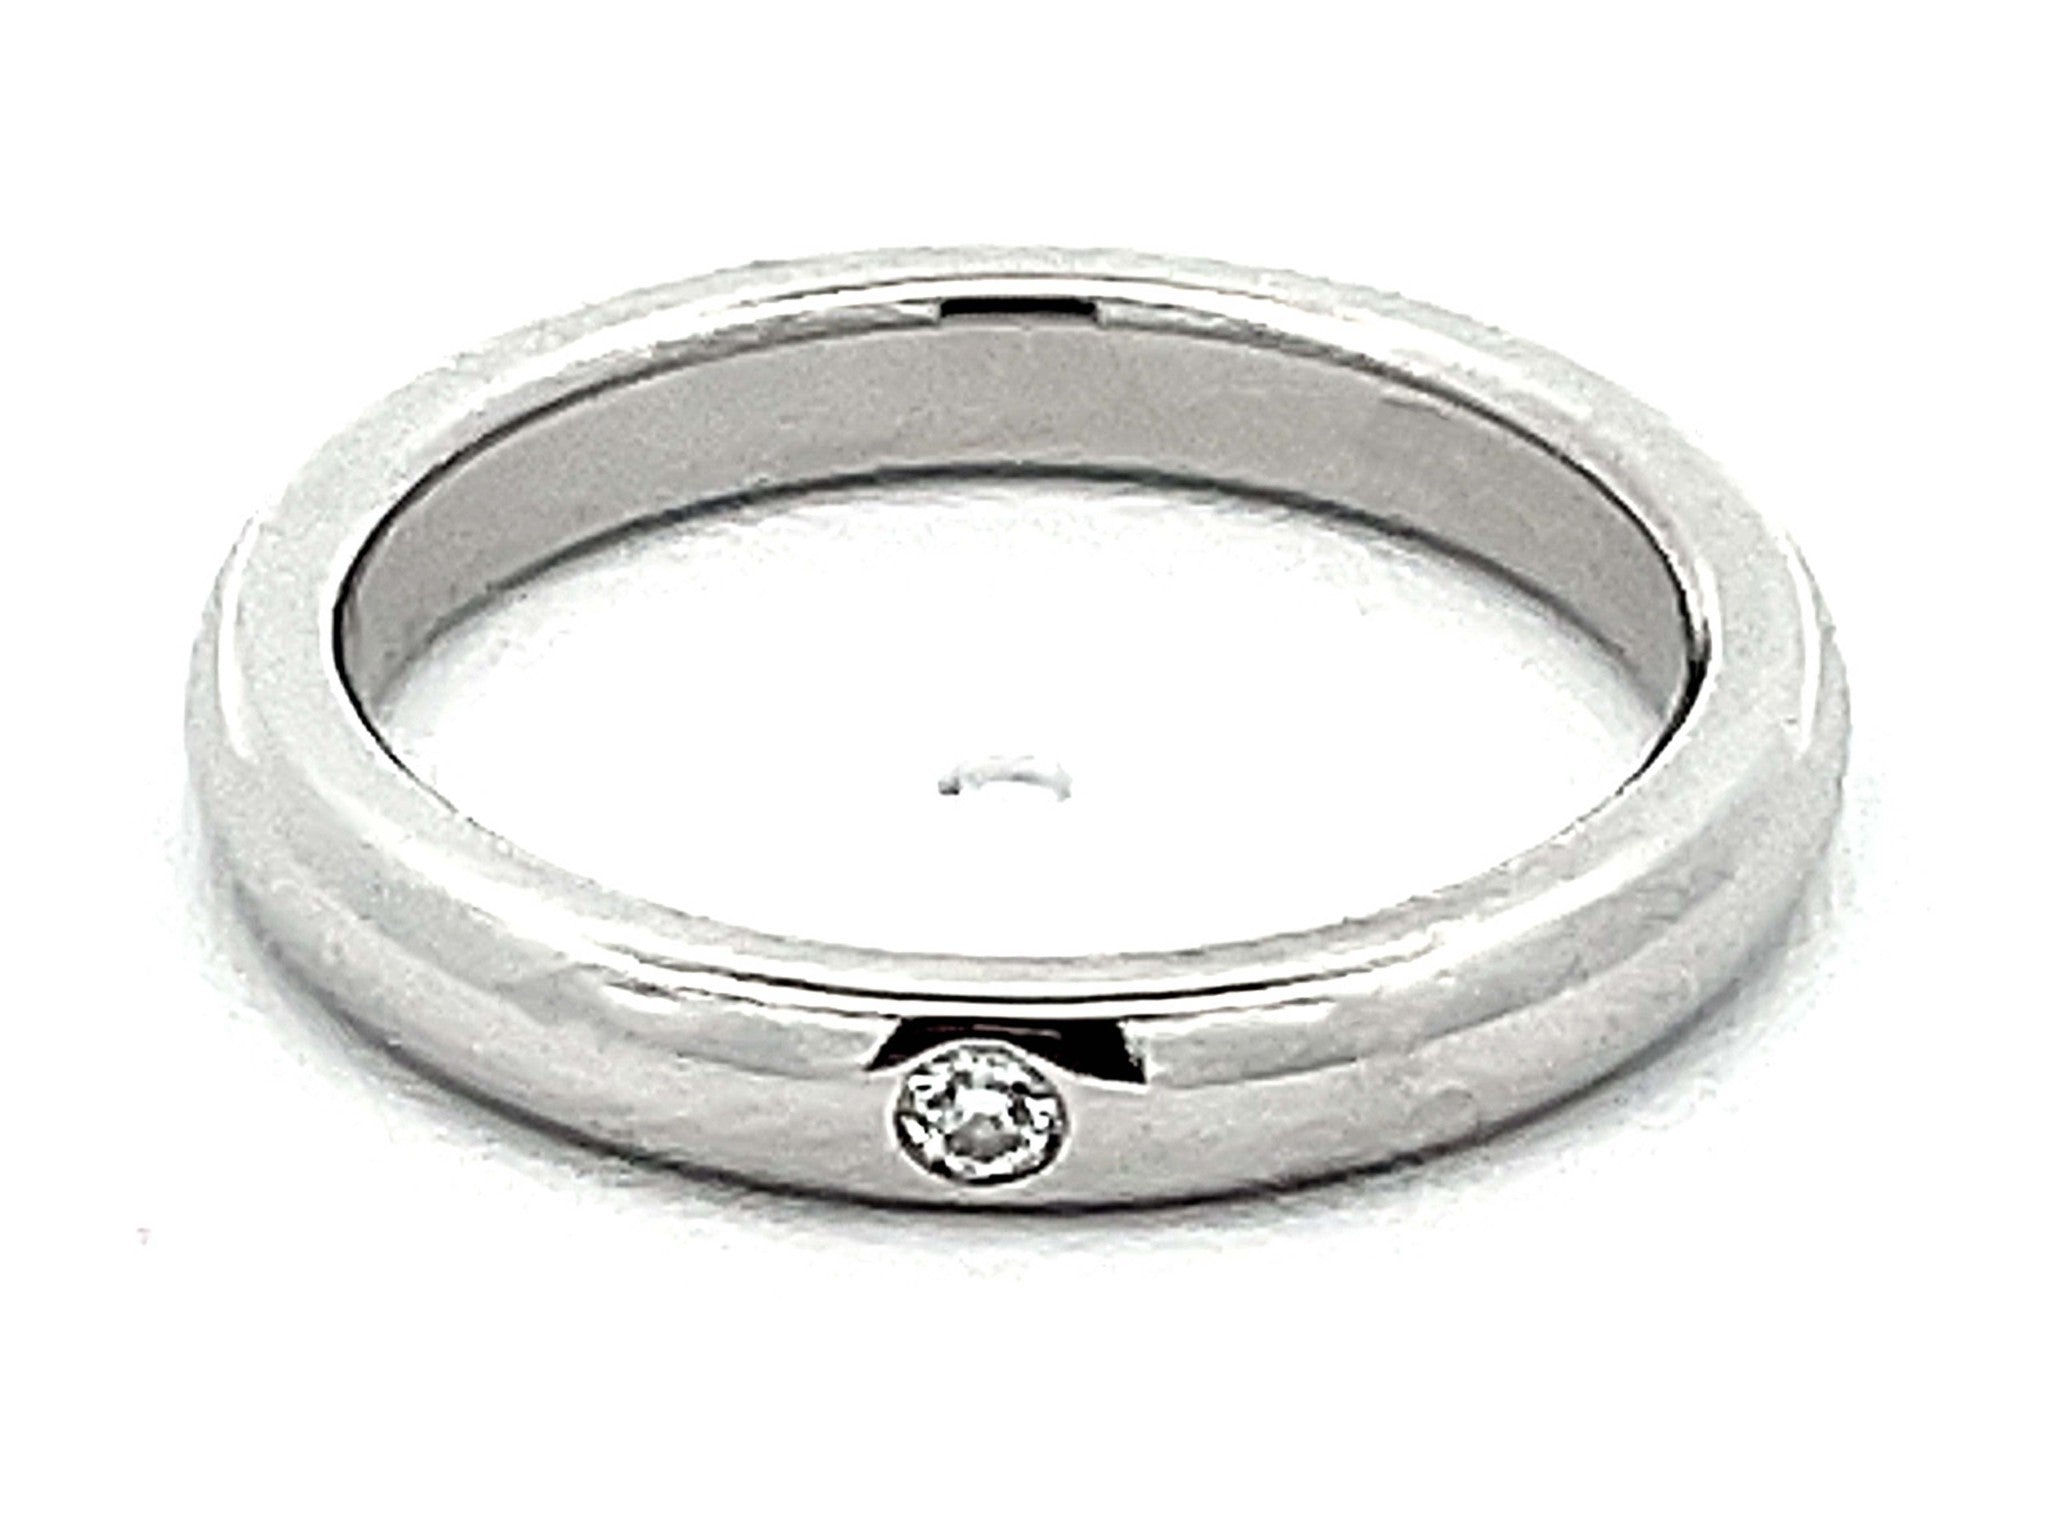 Tiffany & Co. Diamond Wedding Band Ring in Platinum Size 4